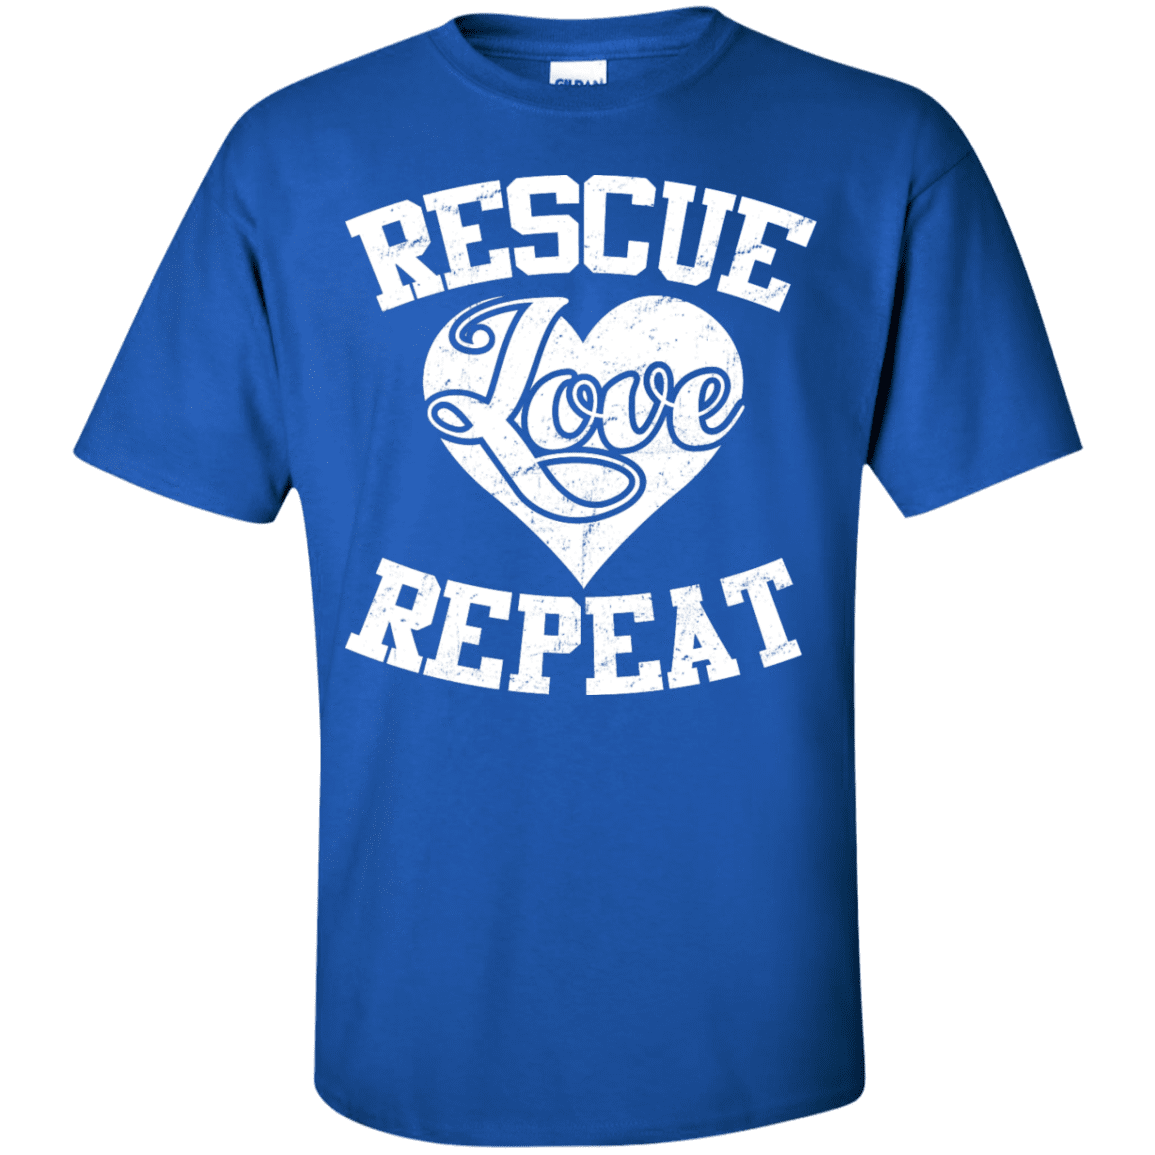 Rescue Love Repeat - T Shirt.